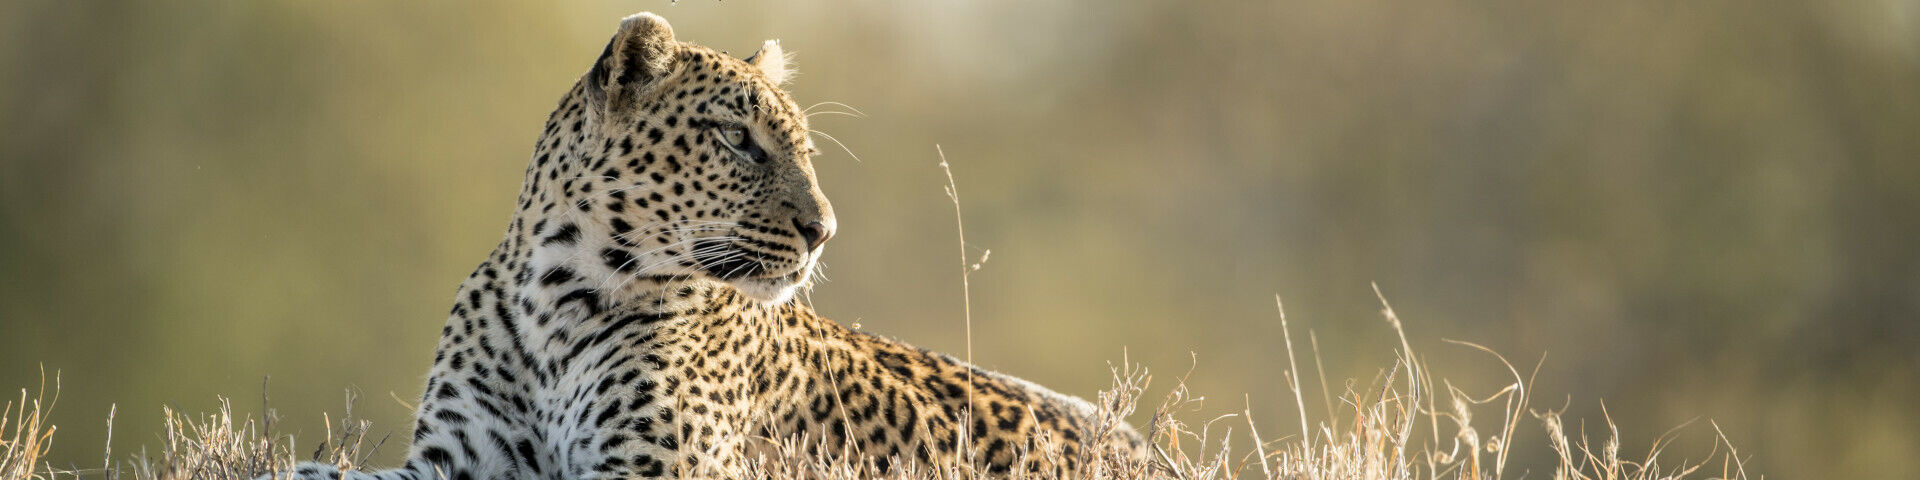 Banner Sabi Sand South Africa Leopard Singita Ebony Lodge